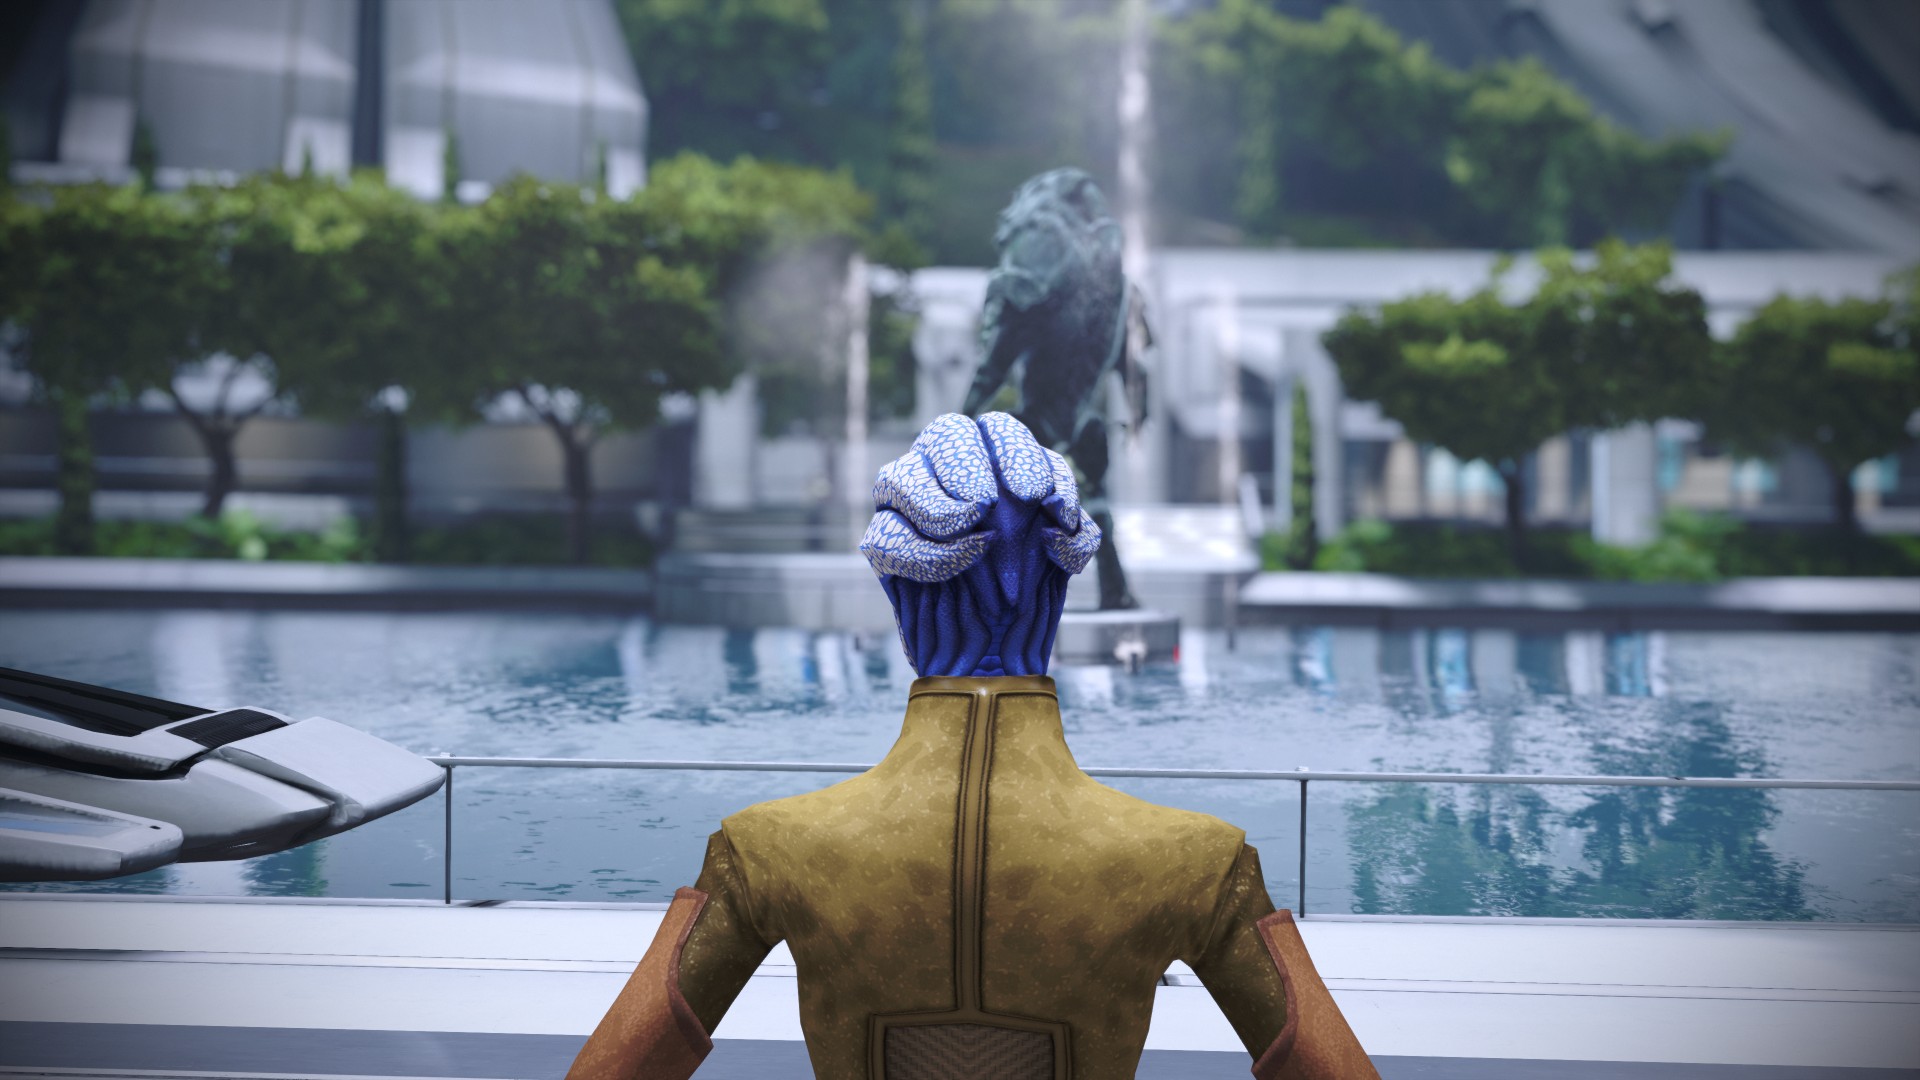 Mass Effect Legendary Editions photo mode captures the beauty of the graphical enhancements GamesRadar+